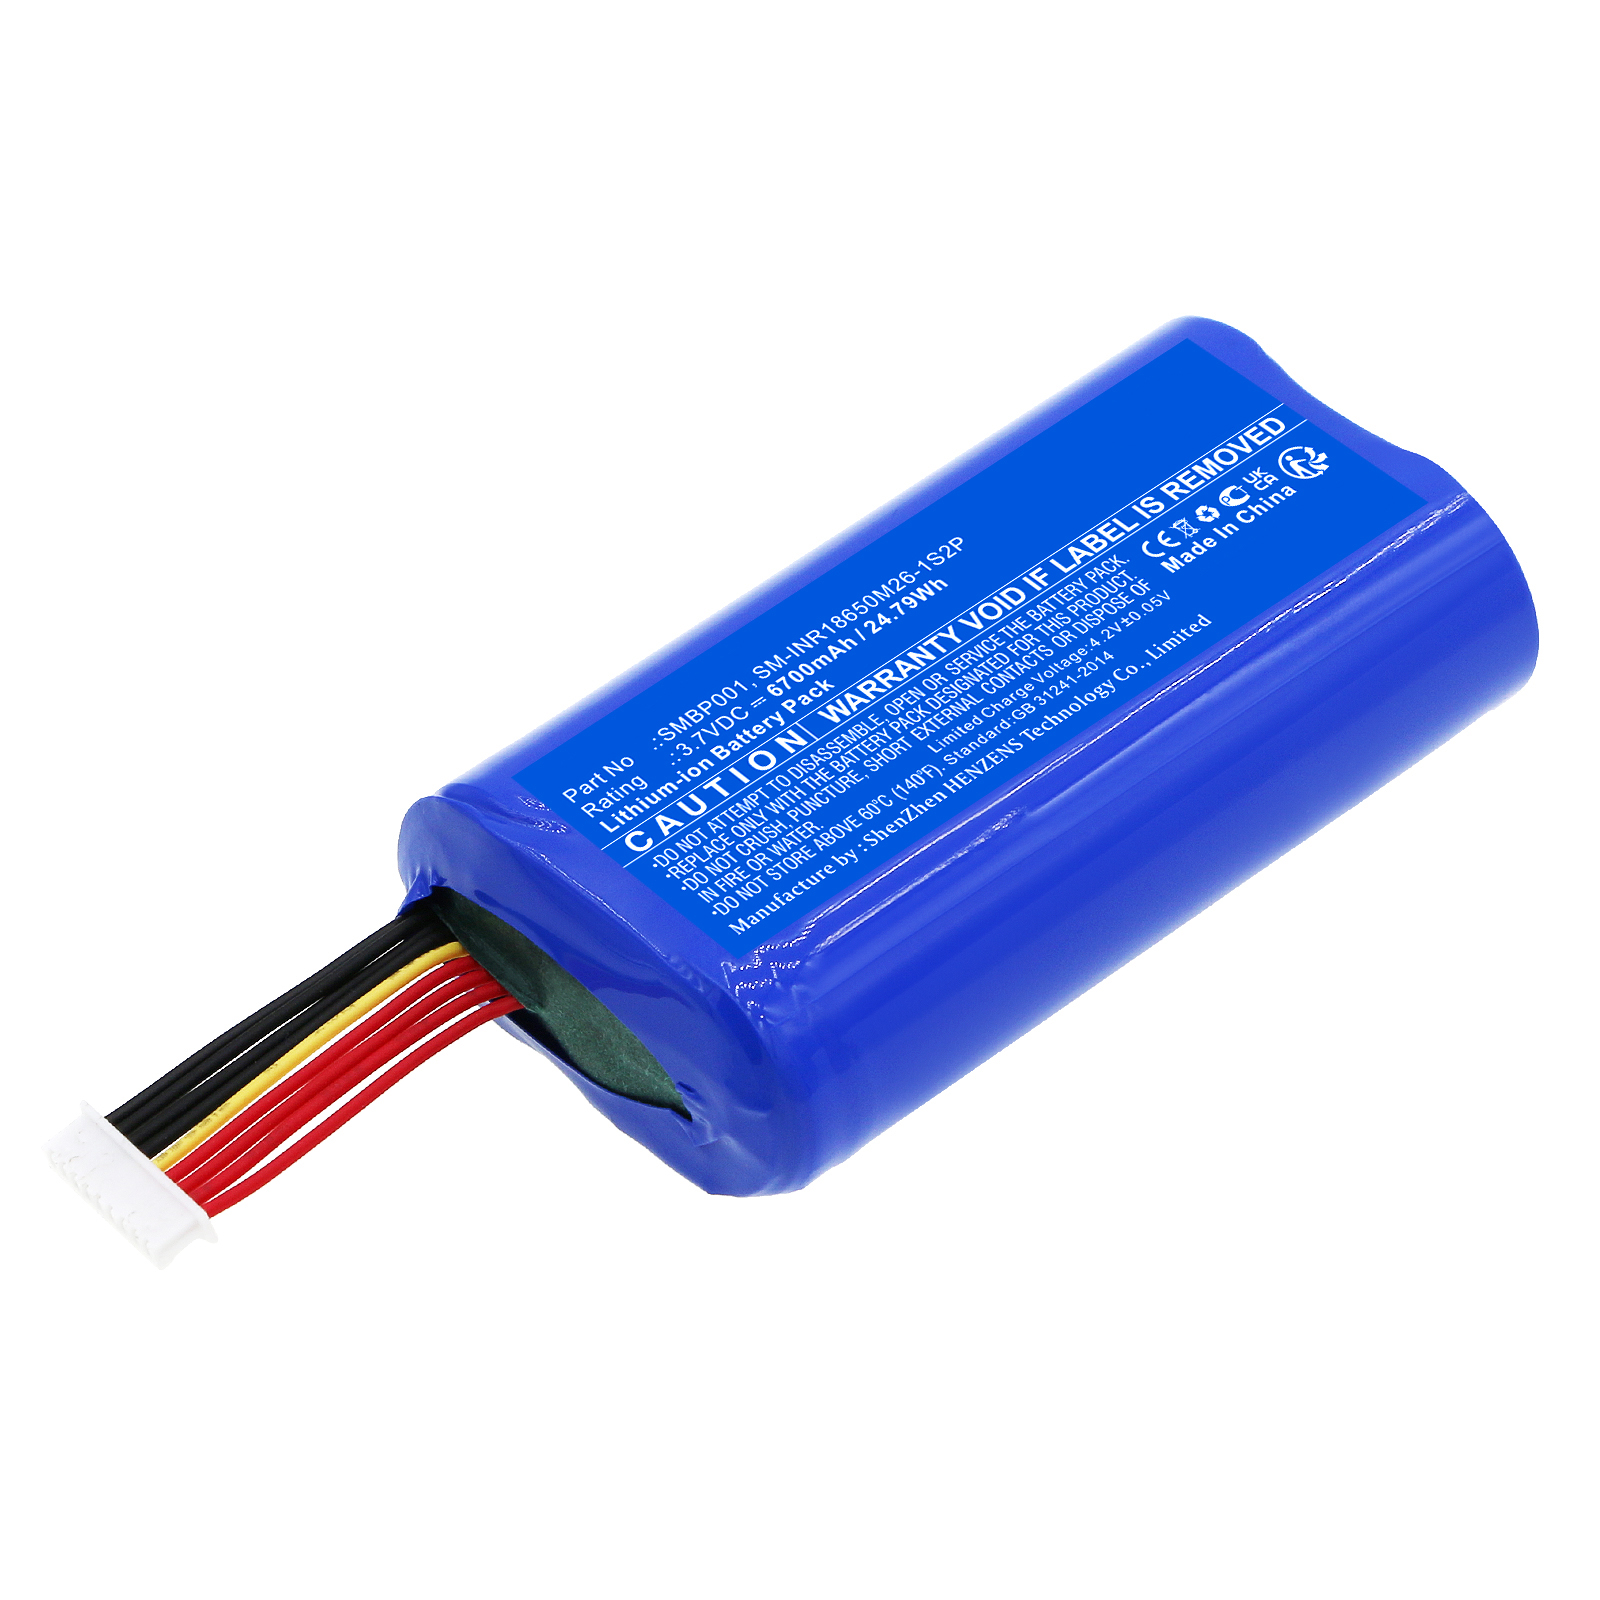 Synergy Digital Credit Card Reader Battery, Compatible with Sunmi SMBP001 Credit Card Reader Battery (Li-Ion, 3.7V, 6700mAh)